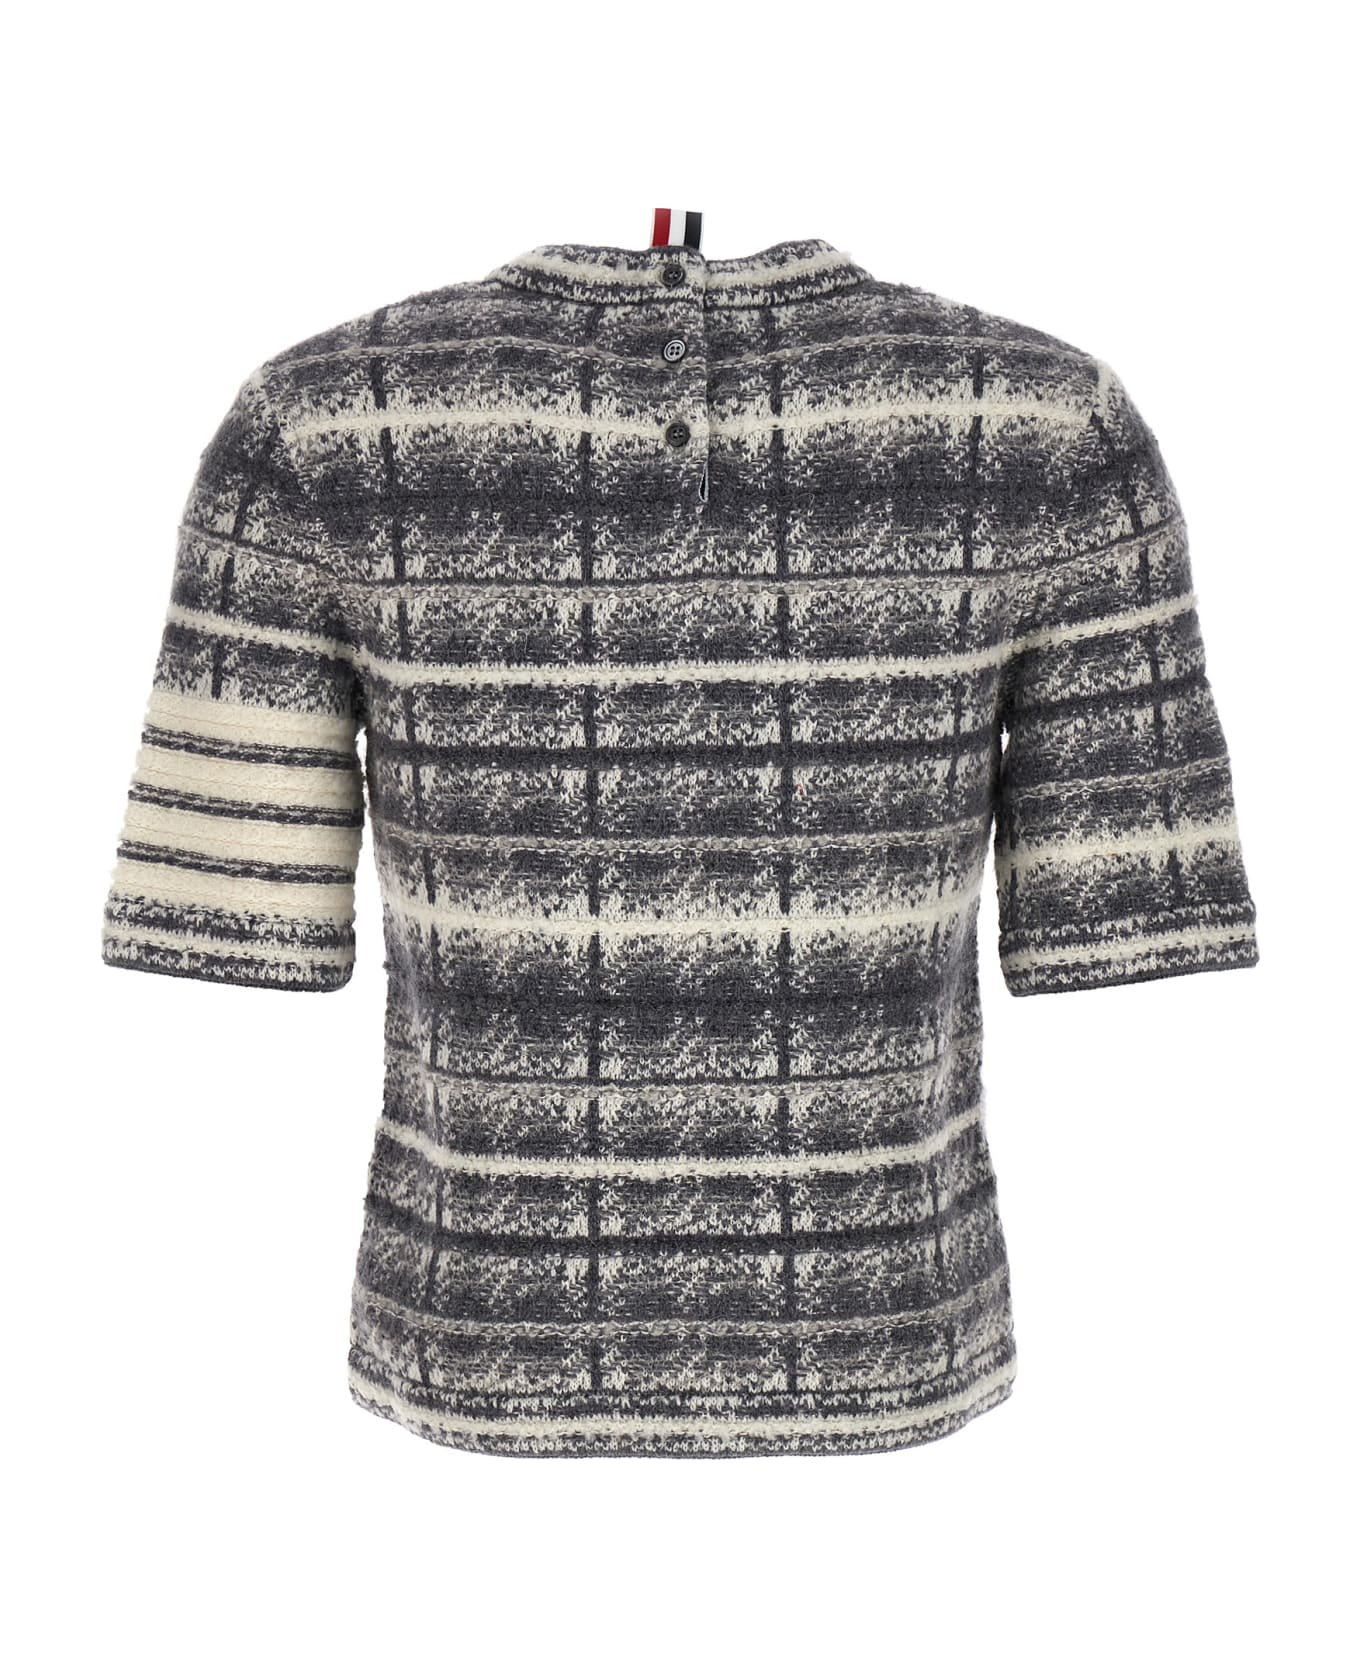 Thom Browne Tartan Sweater - Gray ニットウェア